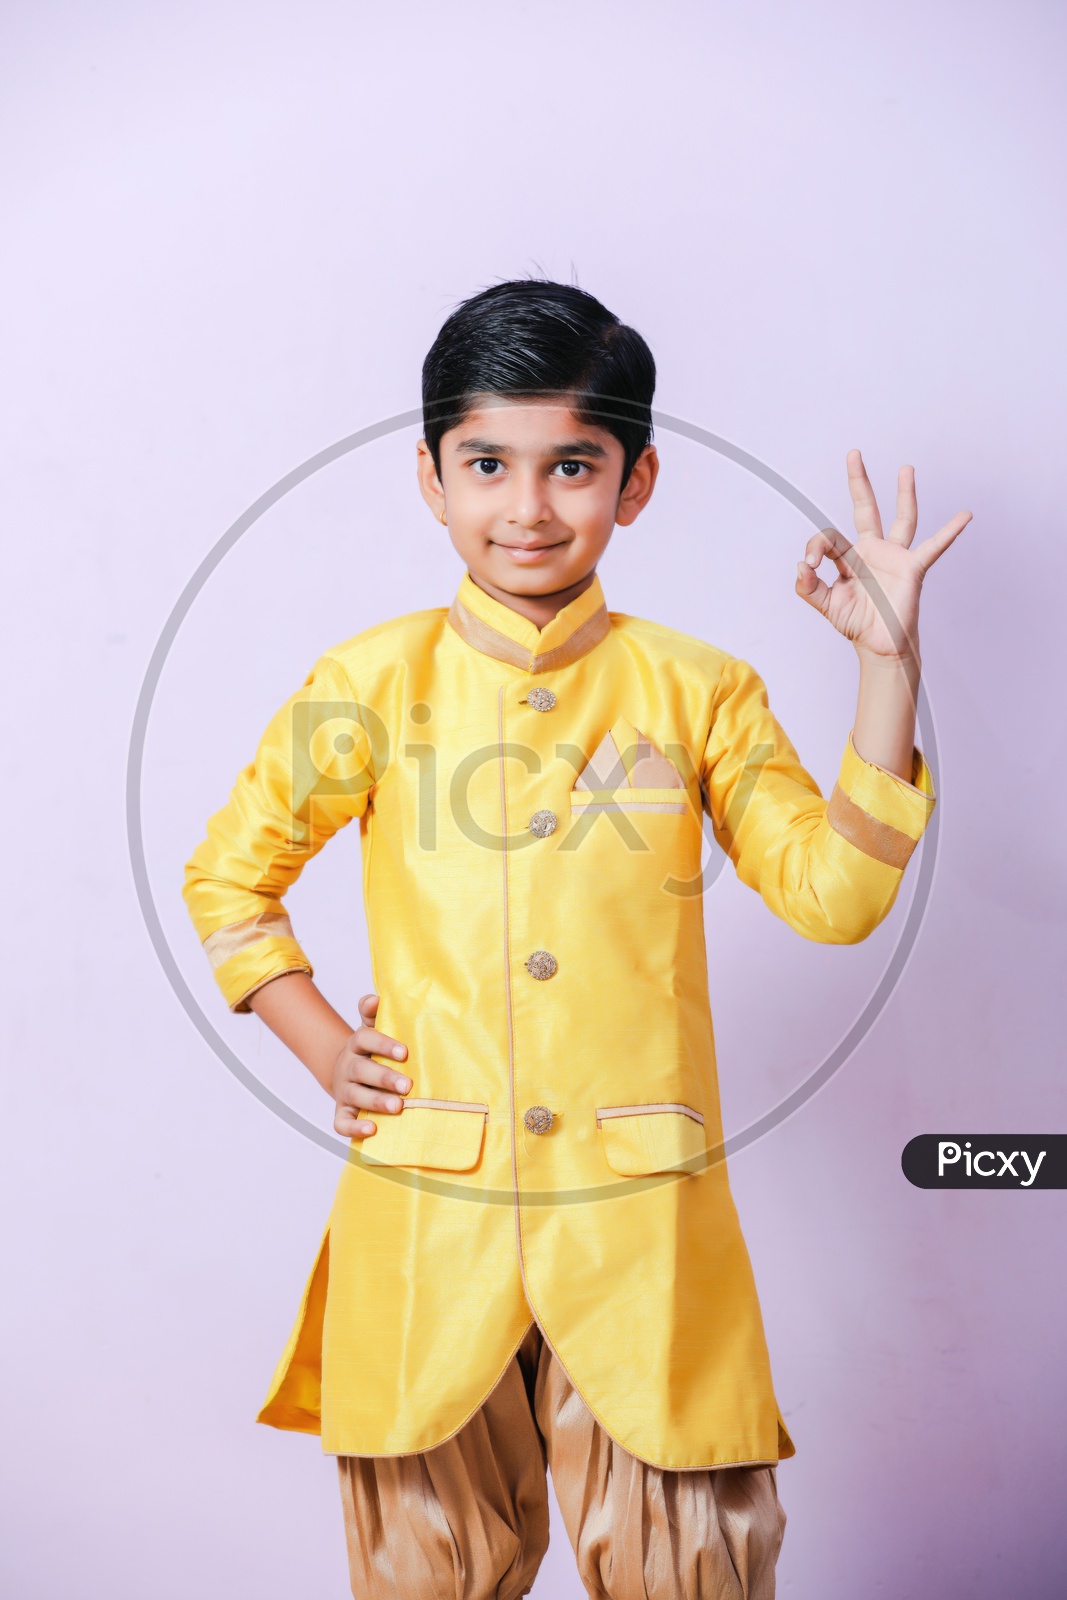 Boy Model Poses Portrait Photo Stock Photo 1449326888 | Shutterstock